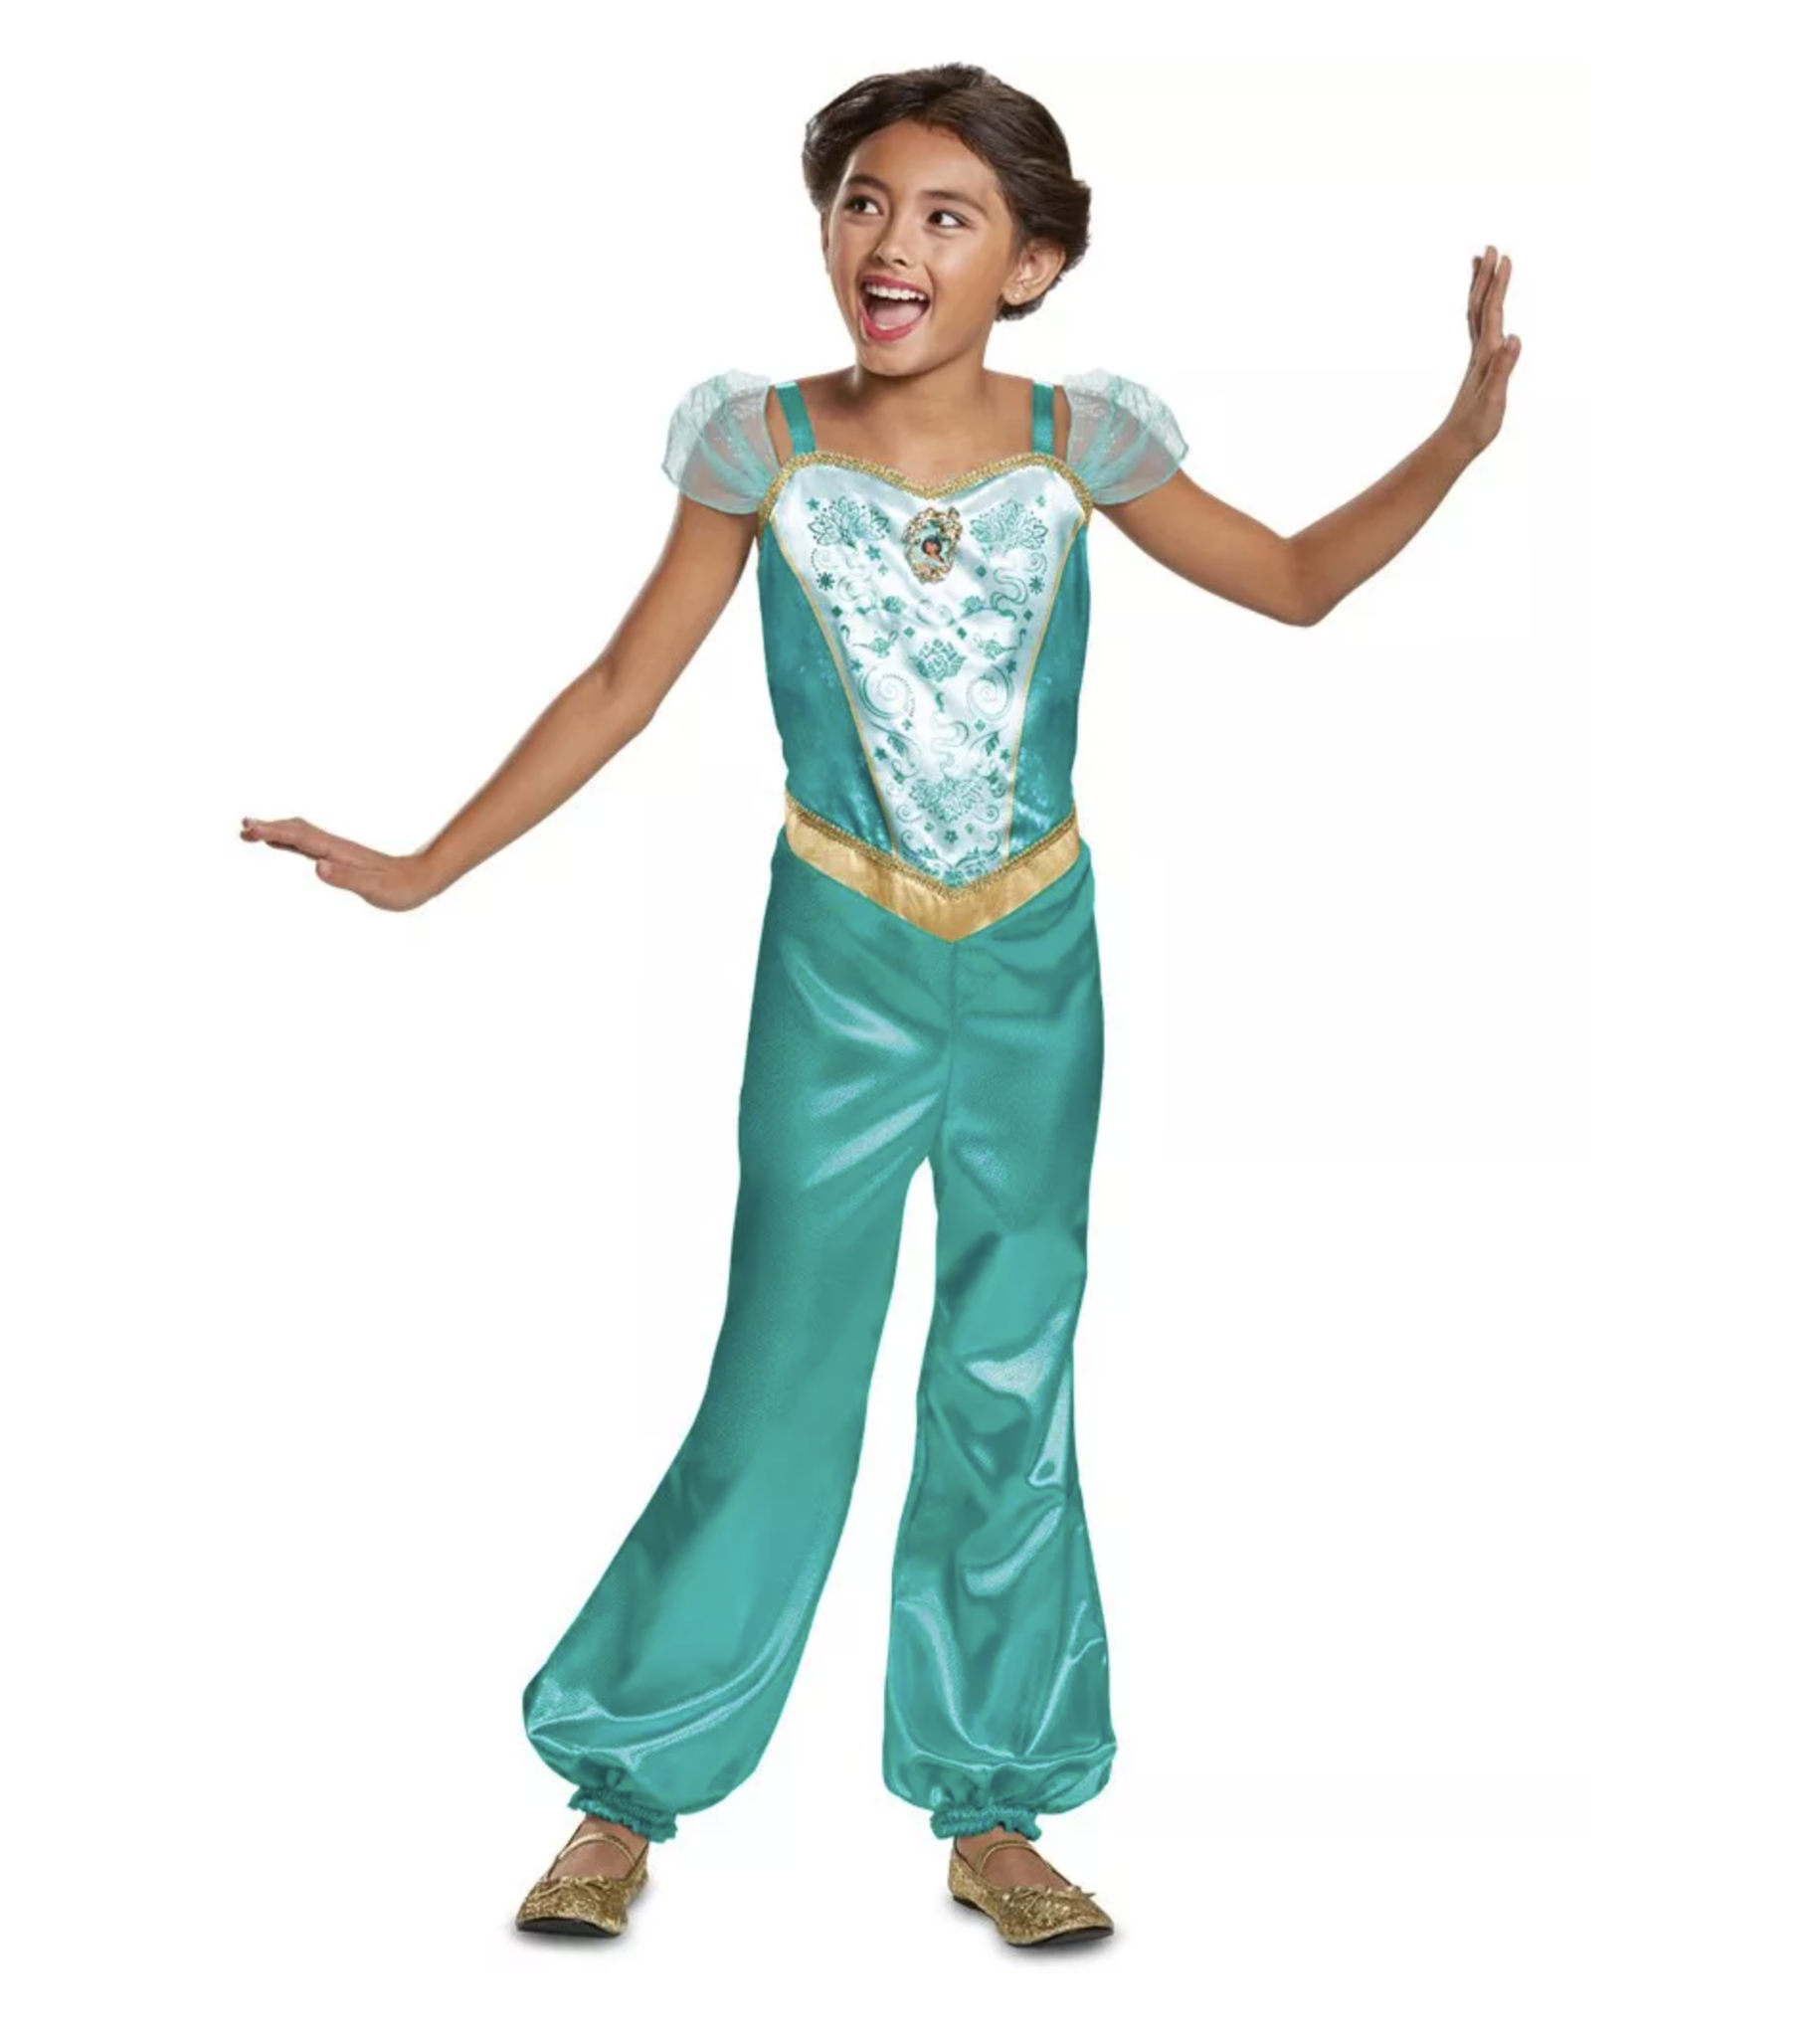 Wolk thema leef ermee Disney Jasmijn meisjes kostuum | Online feestwinkel J-style-deco.nl -  J-style-deco.nl | Online feestwinkel Zeeland